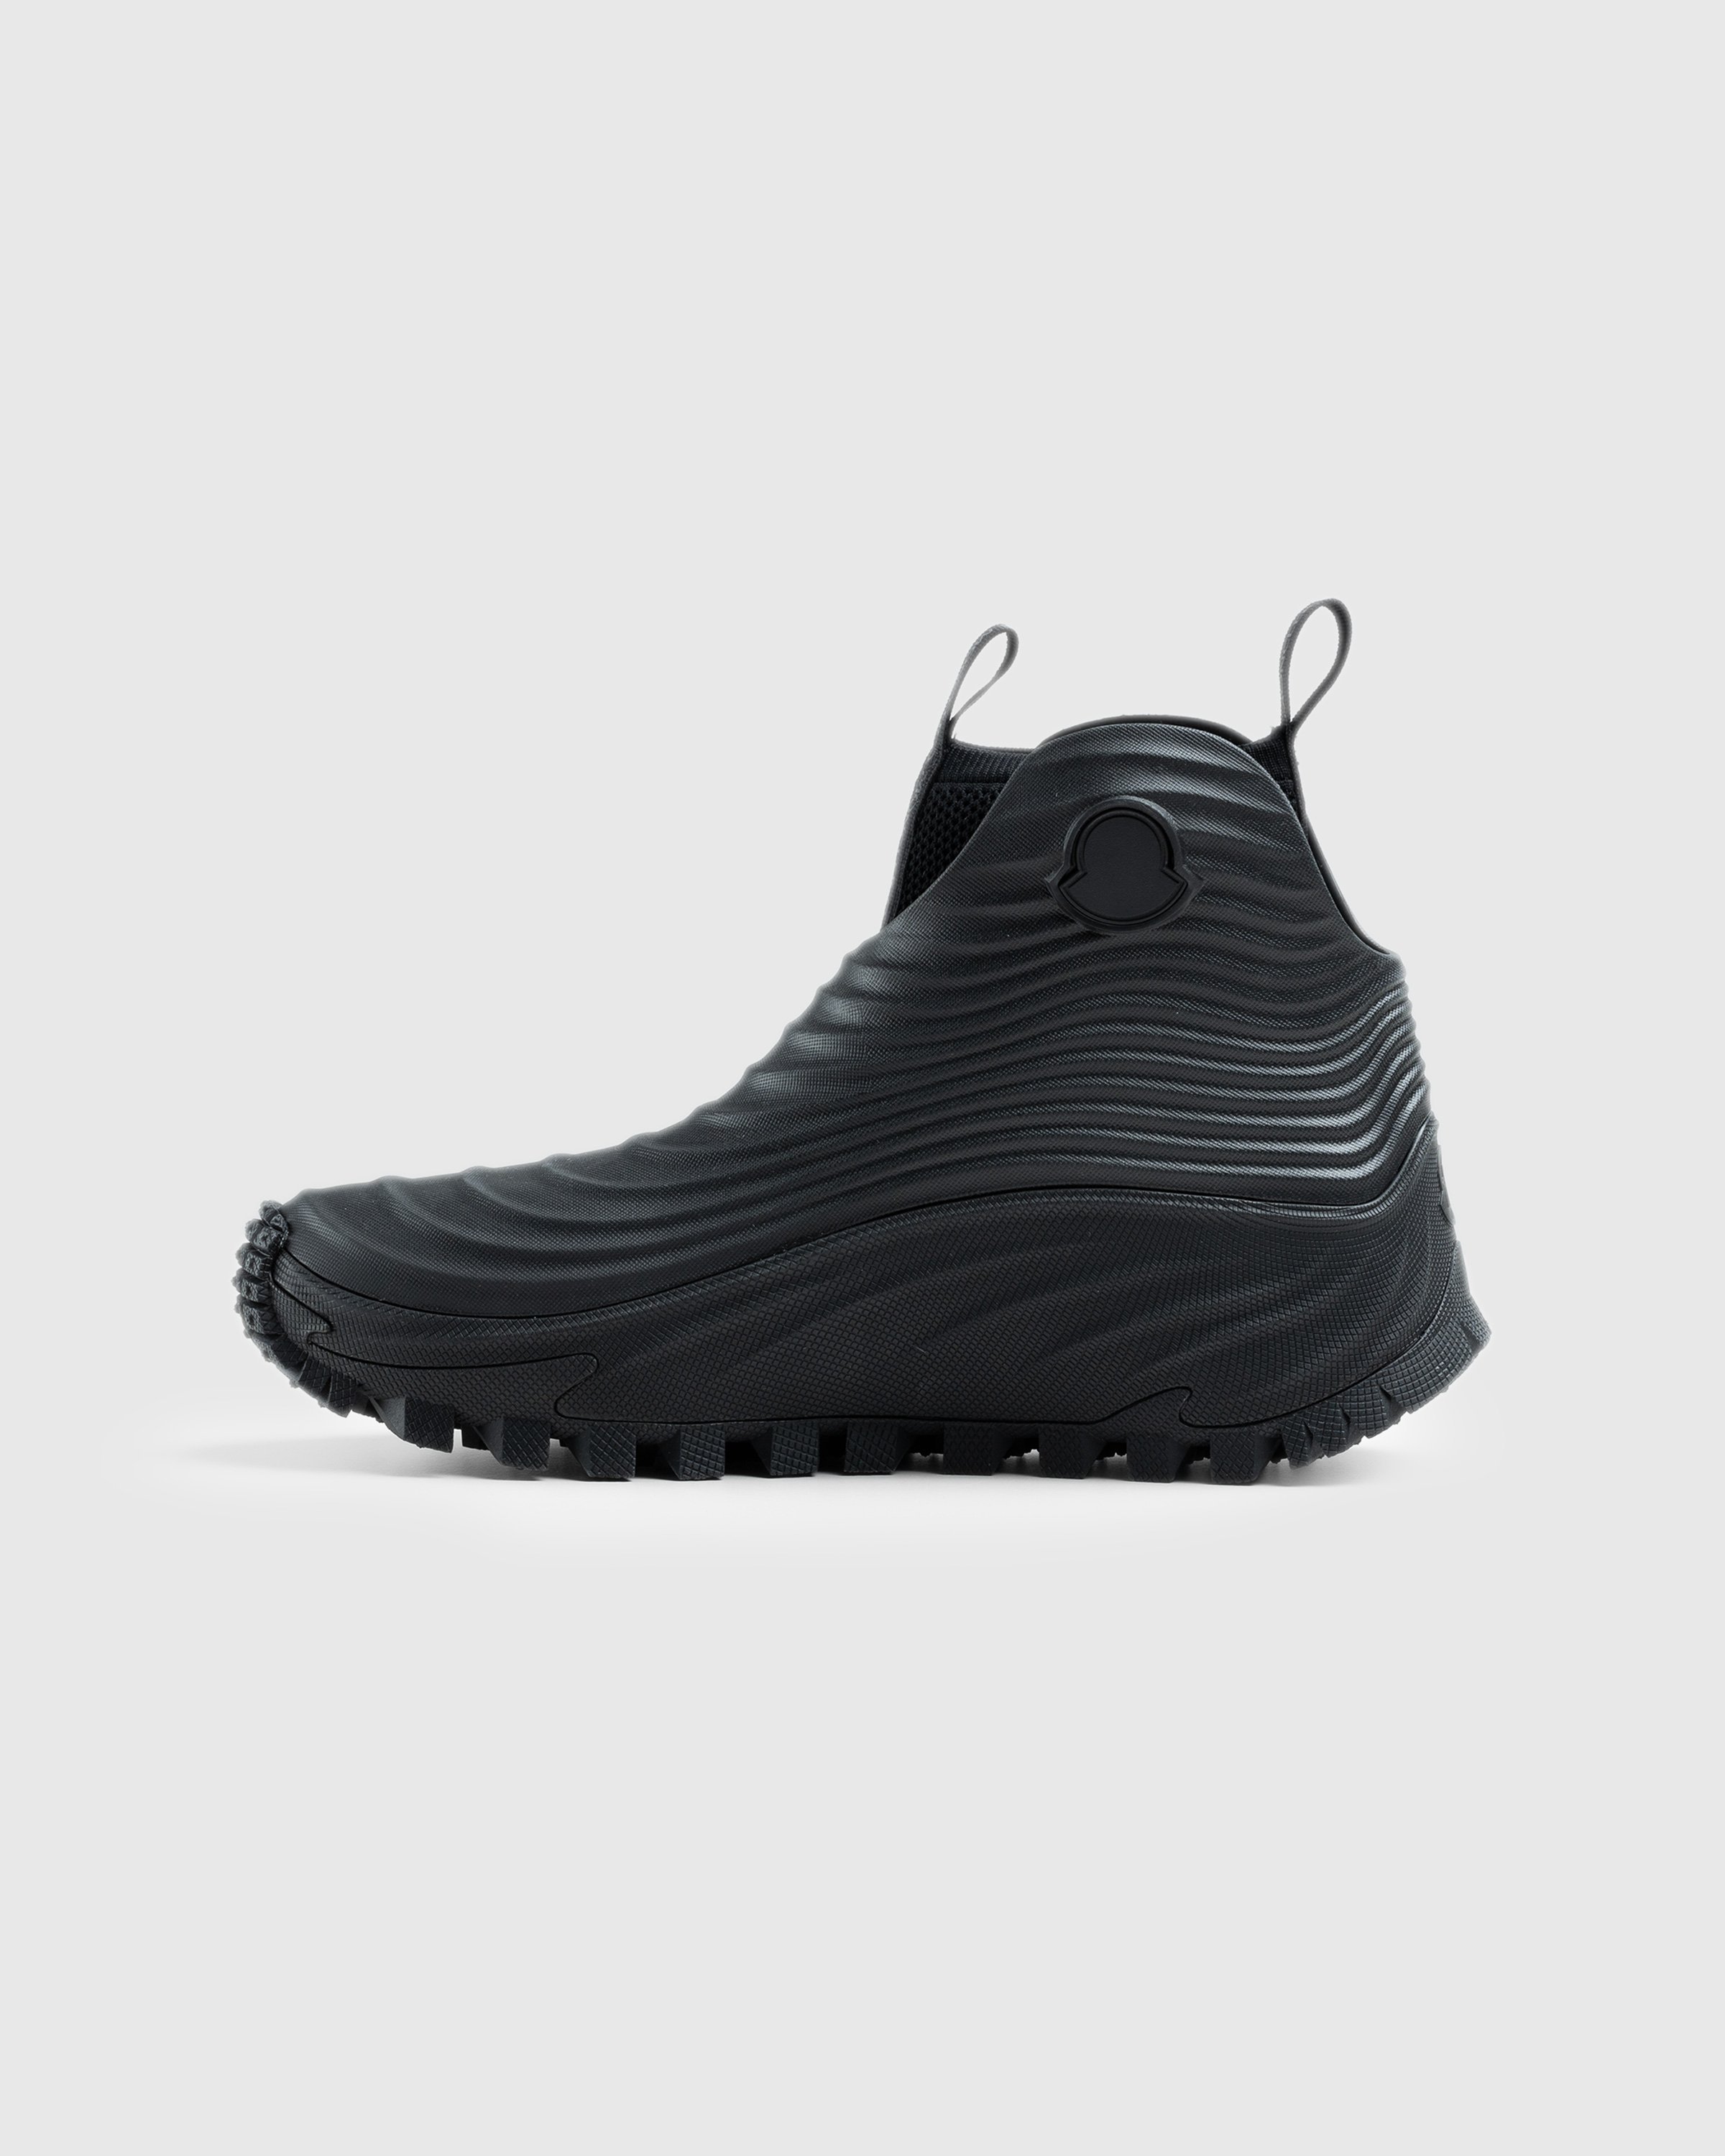 Moncler - Acqua High Rain Boots Black - Footwear - Black - Image 2